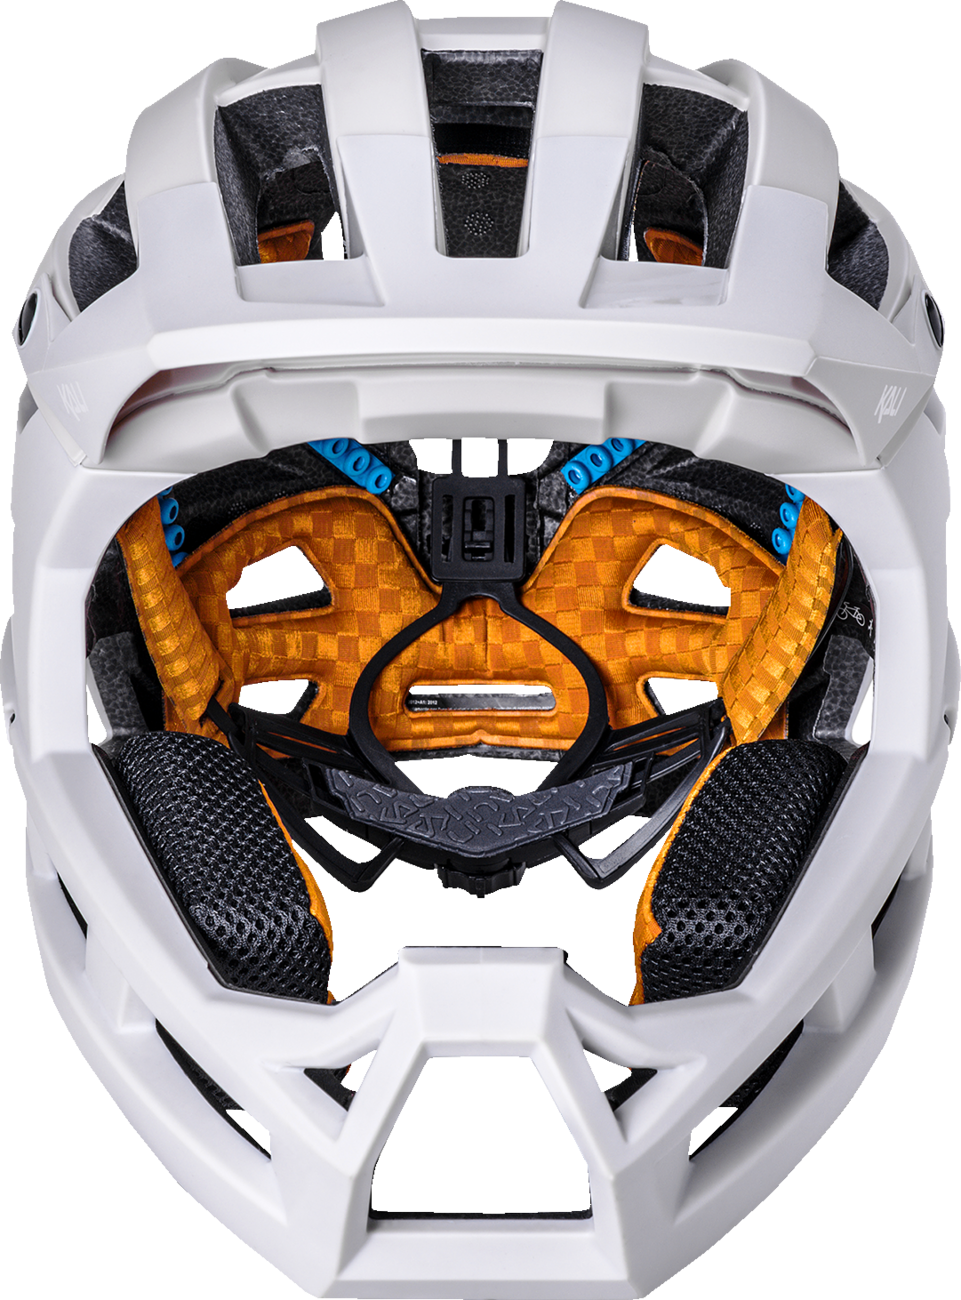 KALI Invader 2.0 Helmet - Matte Khaki - L-2XL 0221822127